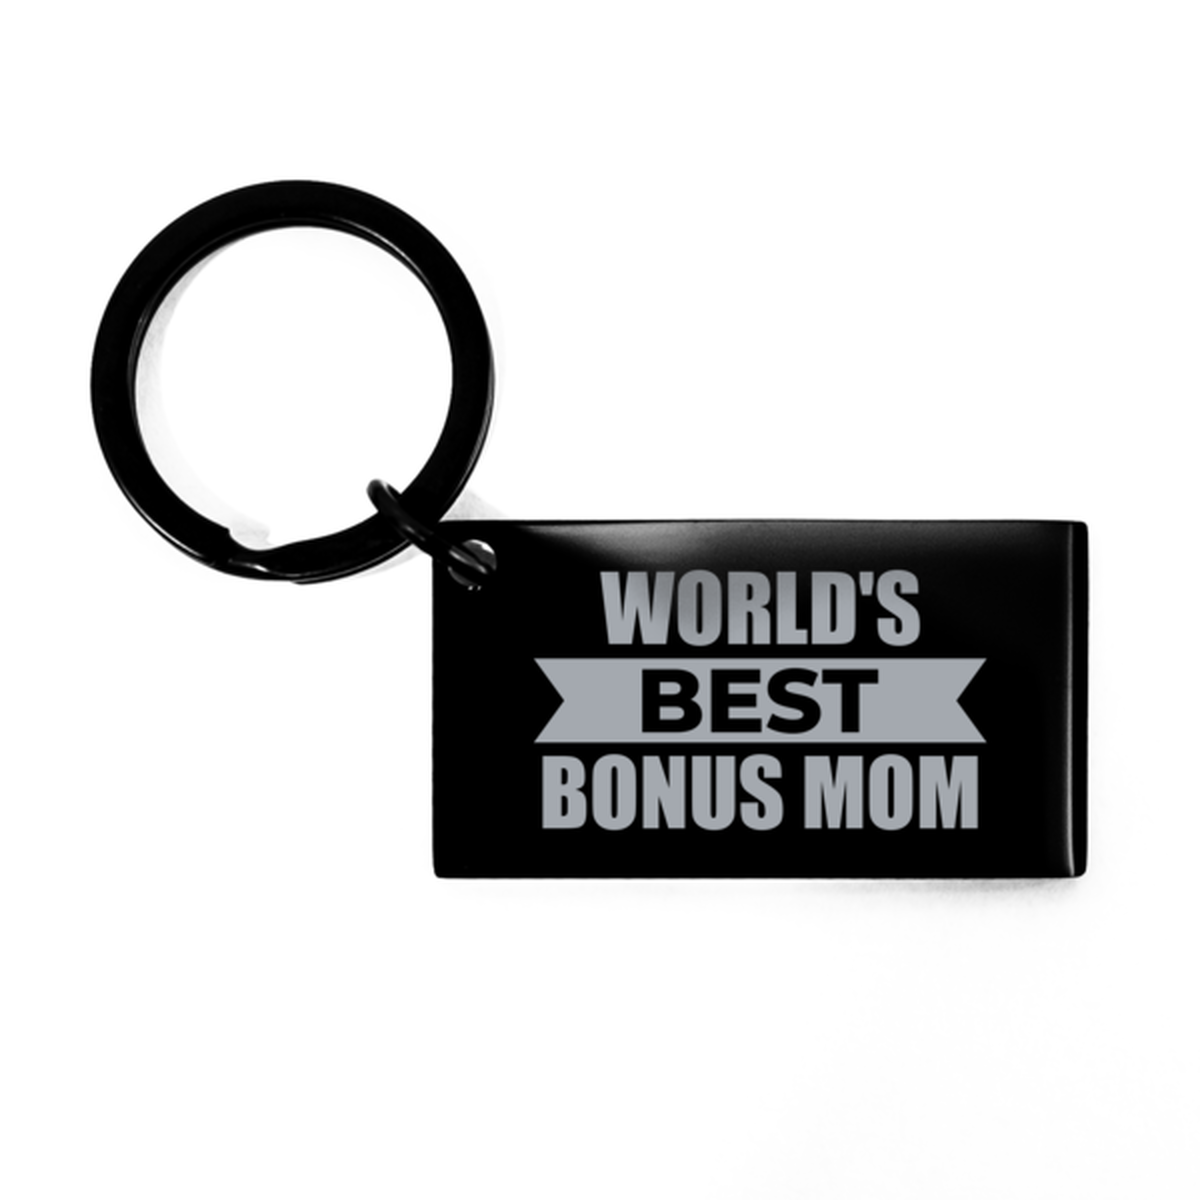 Worlds Best Bonus Mom Gifts, Funny Black Engraved Keychain For Bonus Mom, Birthday Presents For Women